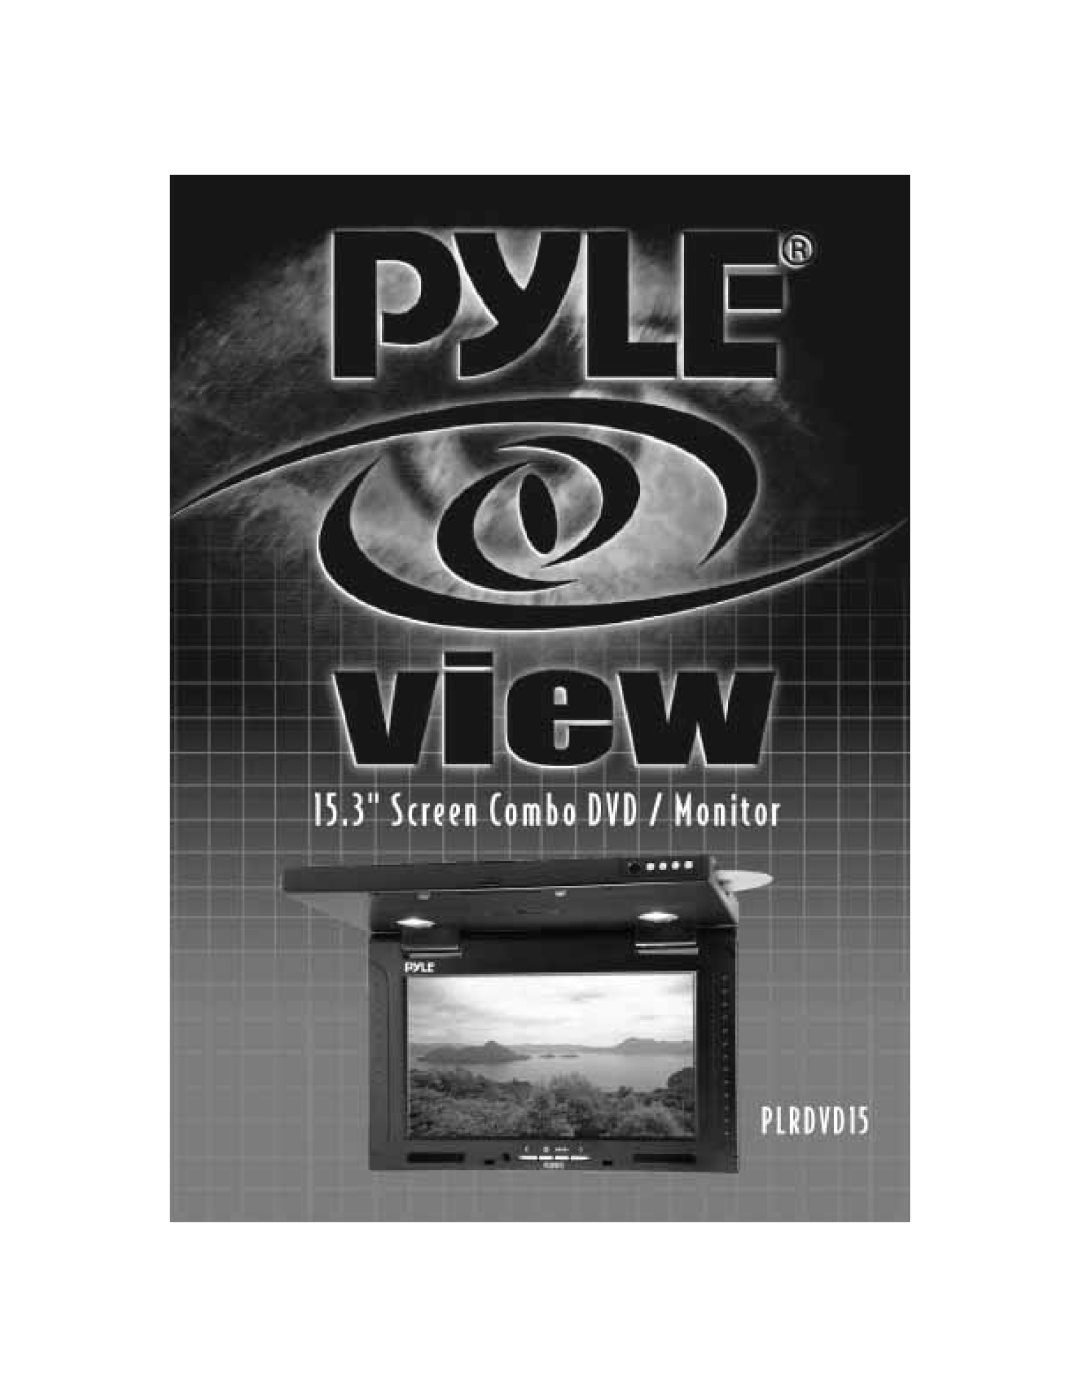 PYLE Audio DVD manual 